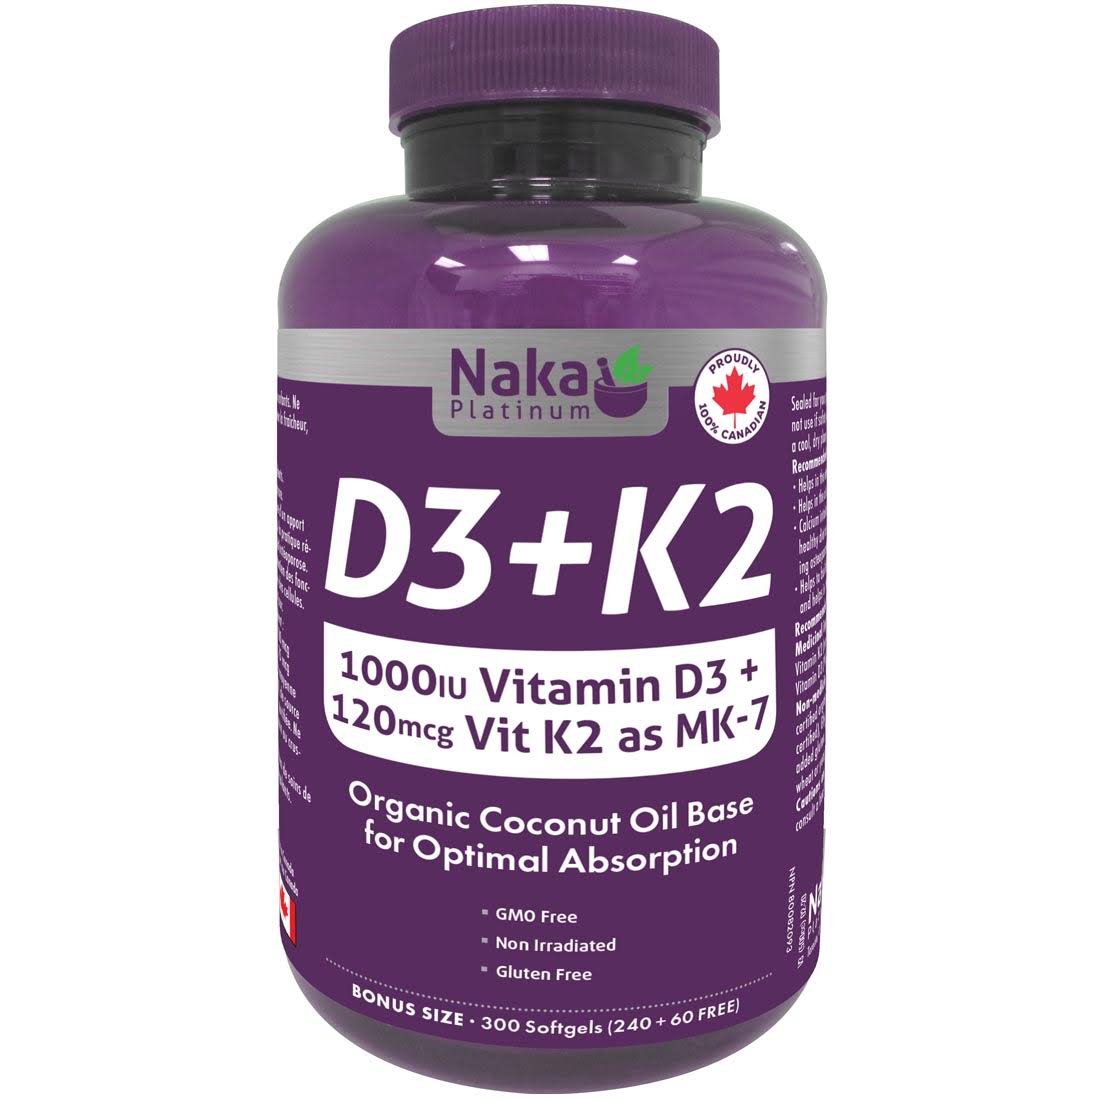 Naka PLATINUM D3+K2 (150 SOFTGELS)